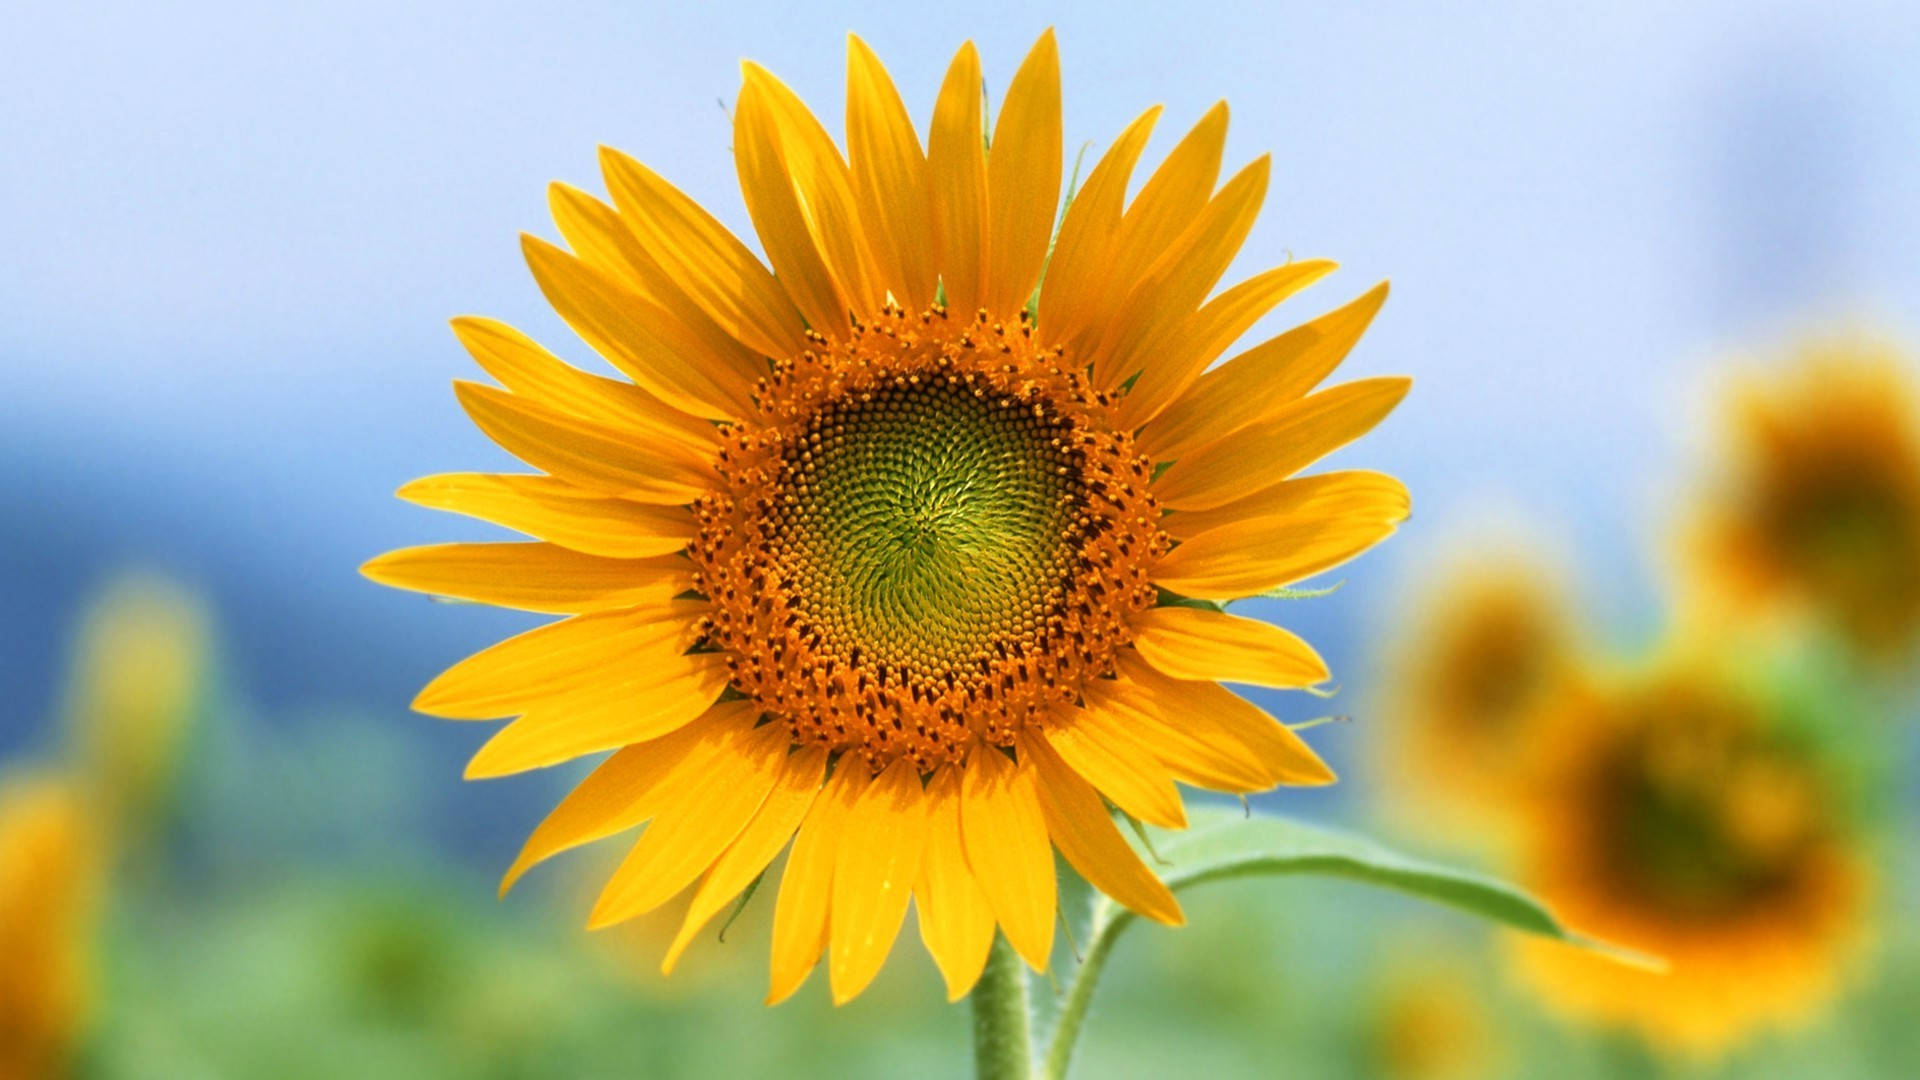 "The Beauty of Nature: A Sunflower Desktop Background" Wallpaper